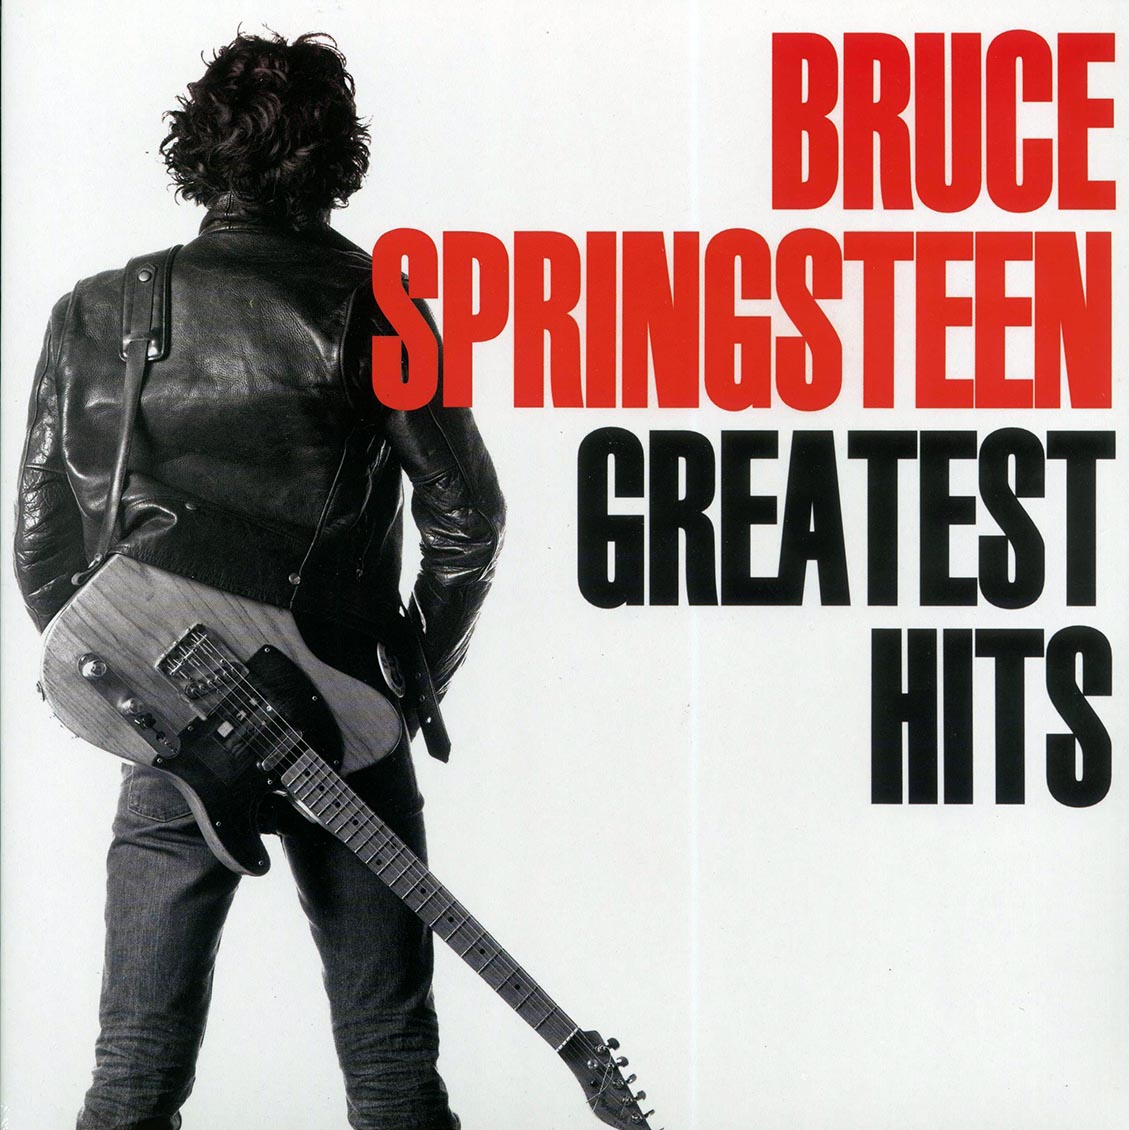 Bruce Springsteen - Greatest Hits (2xLP) - Vinyl LP